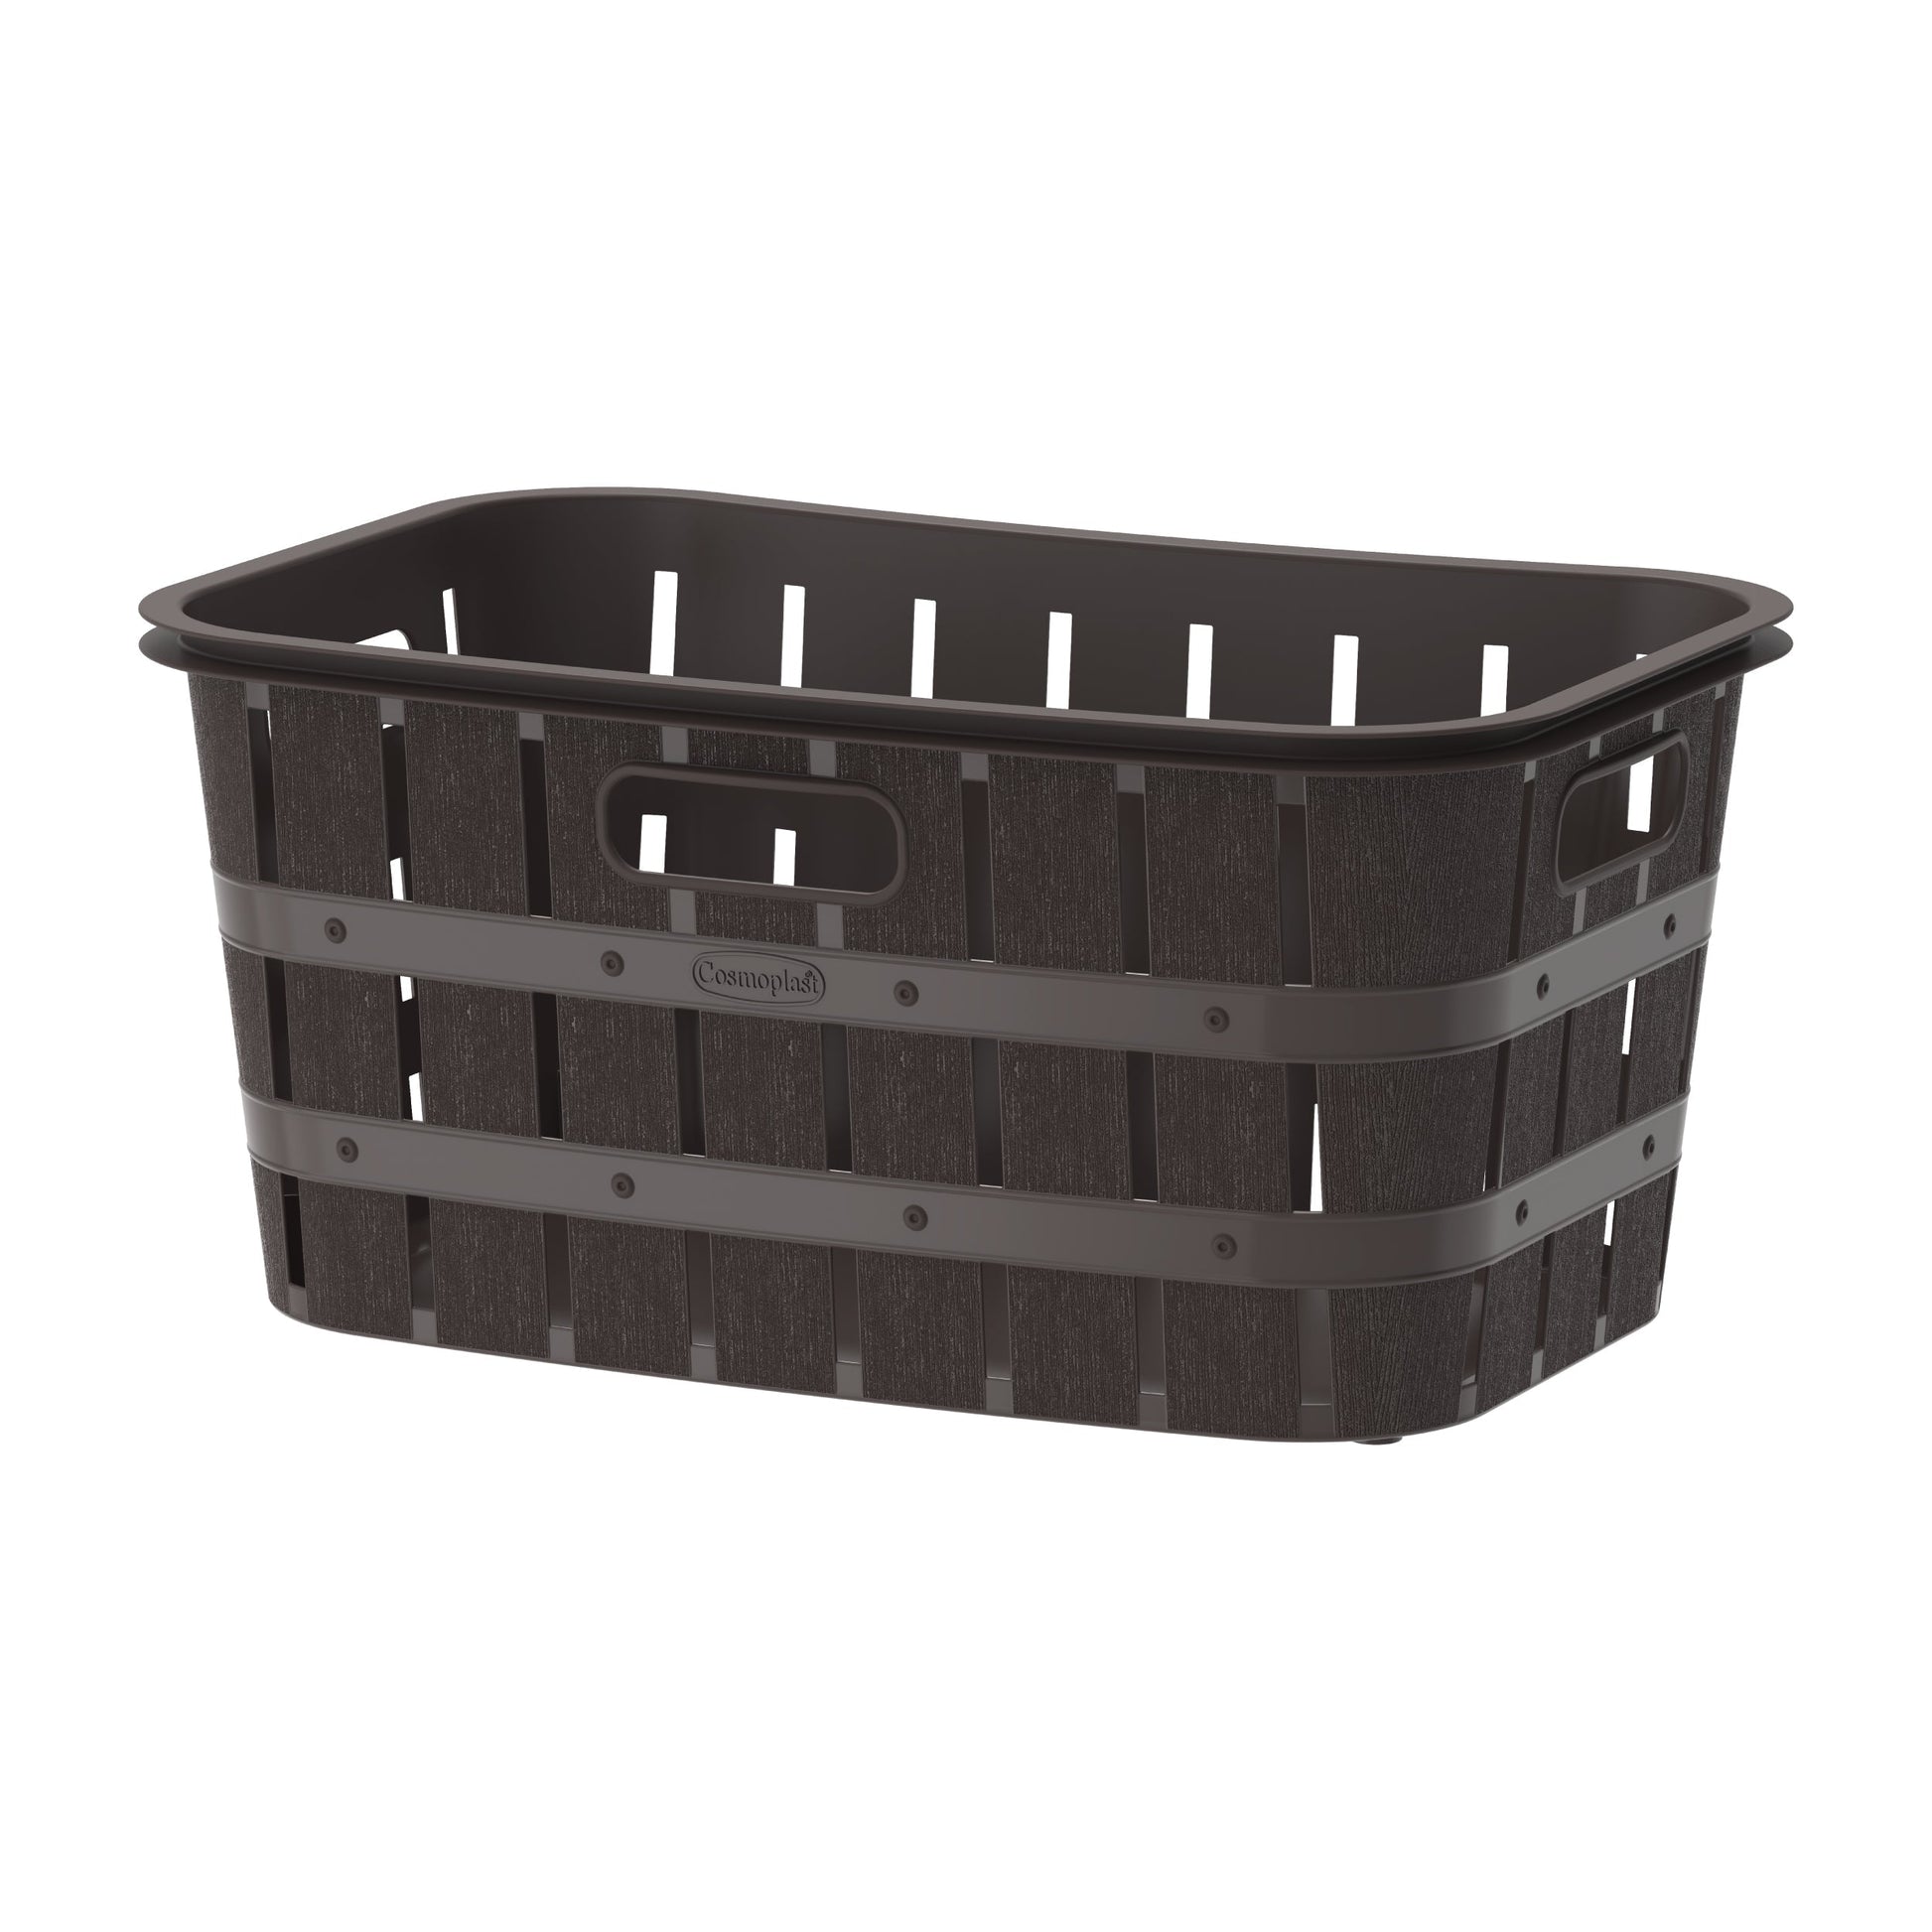 40L Cedargrain Laundry Basket - Cosmoplast Qatar